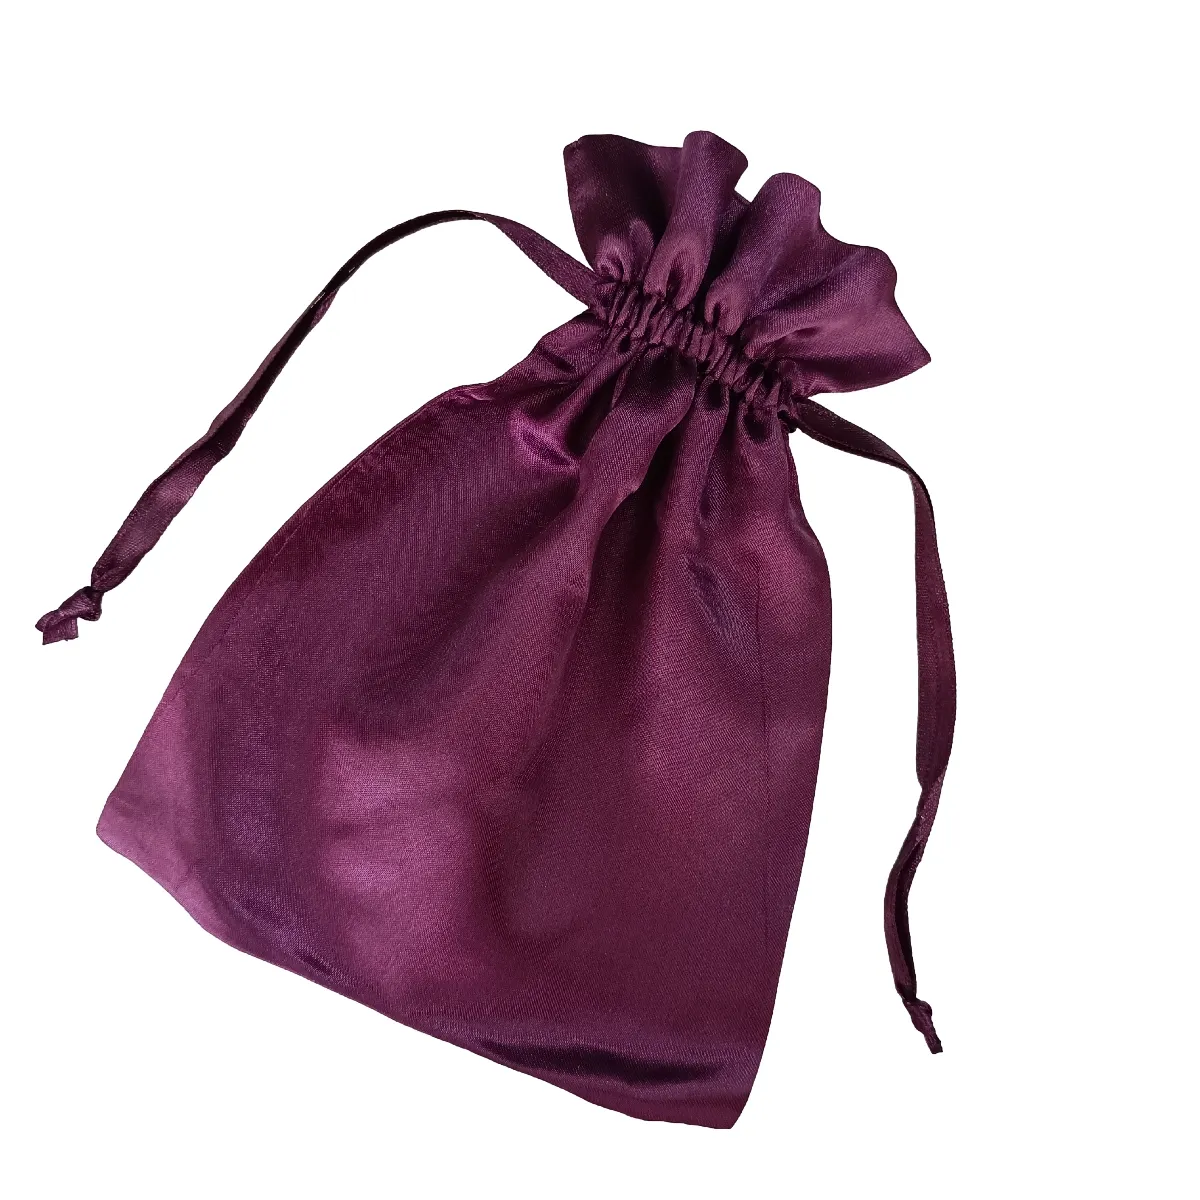 उच्च गुणवत्ता वाले लक्जरी लोगो मुद्रित कस्टम सैटिन बैग रेशम साटन ड्रॉस्ट्रिंग बैग